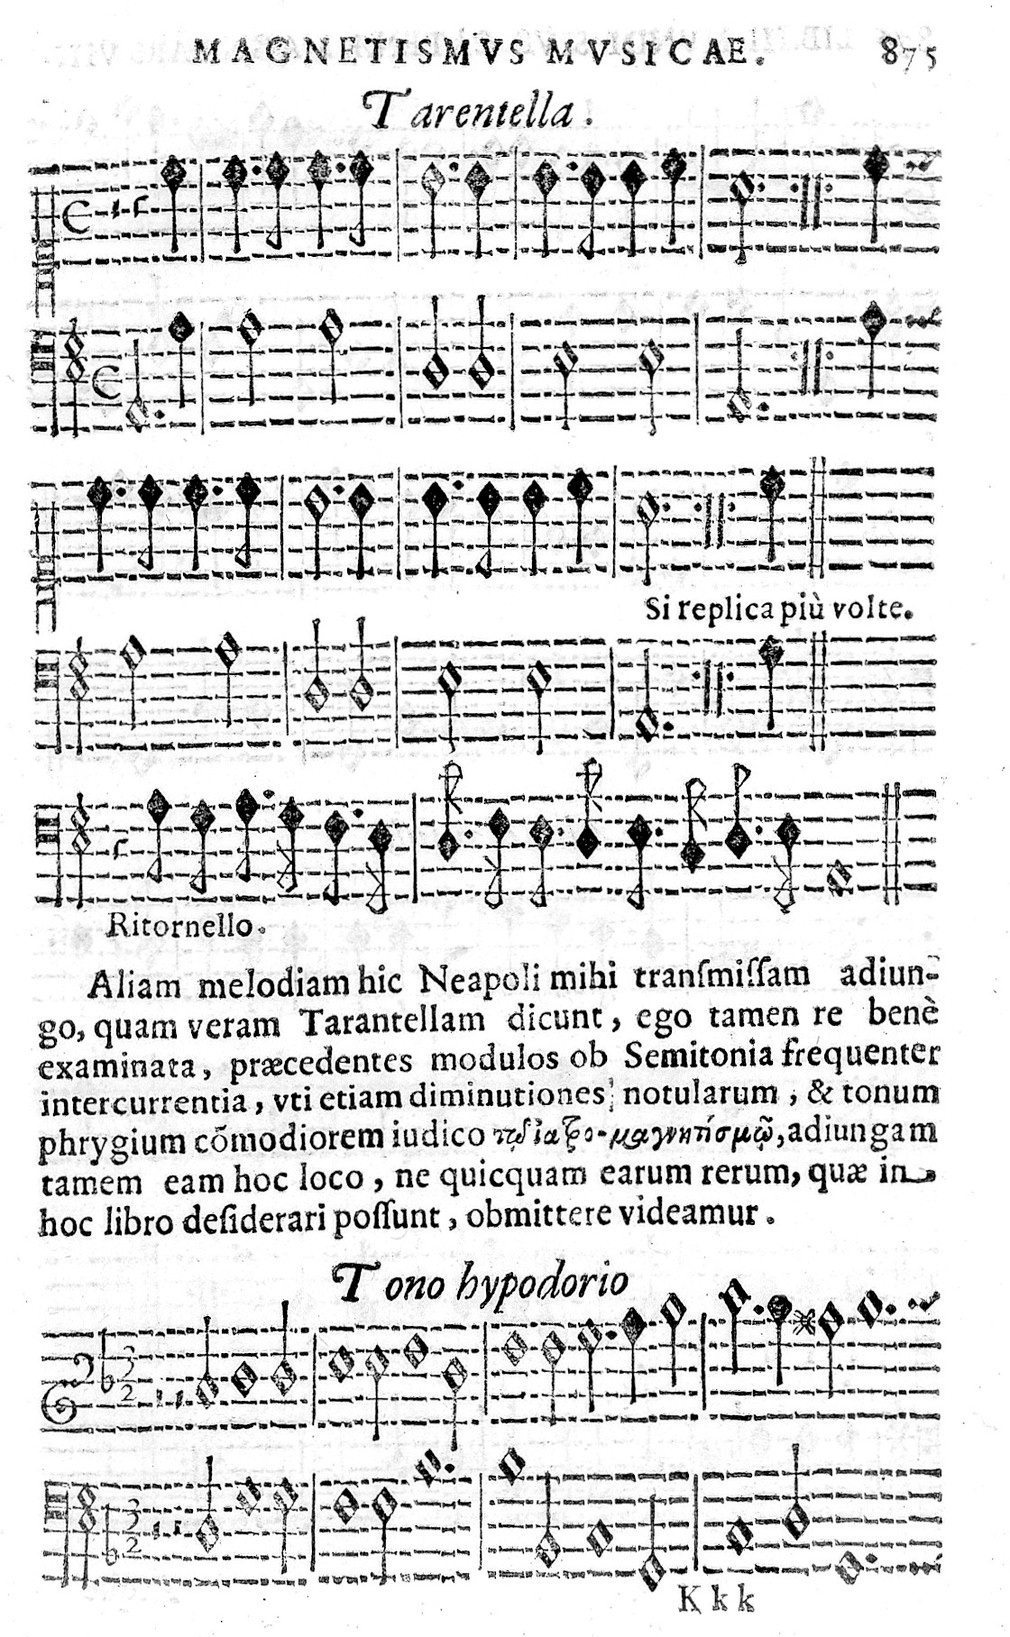 Image of 16th Century sheet music